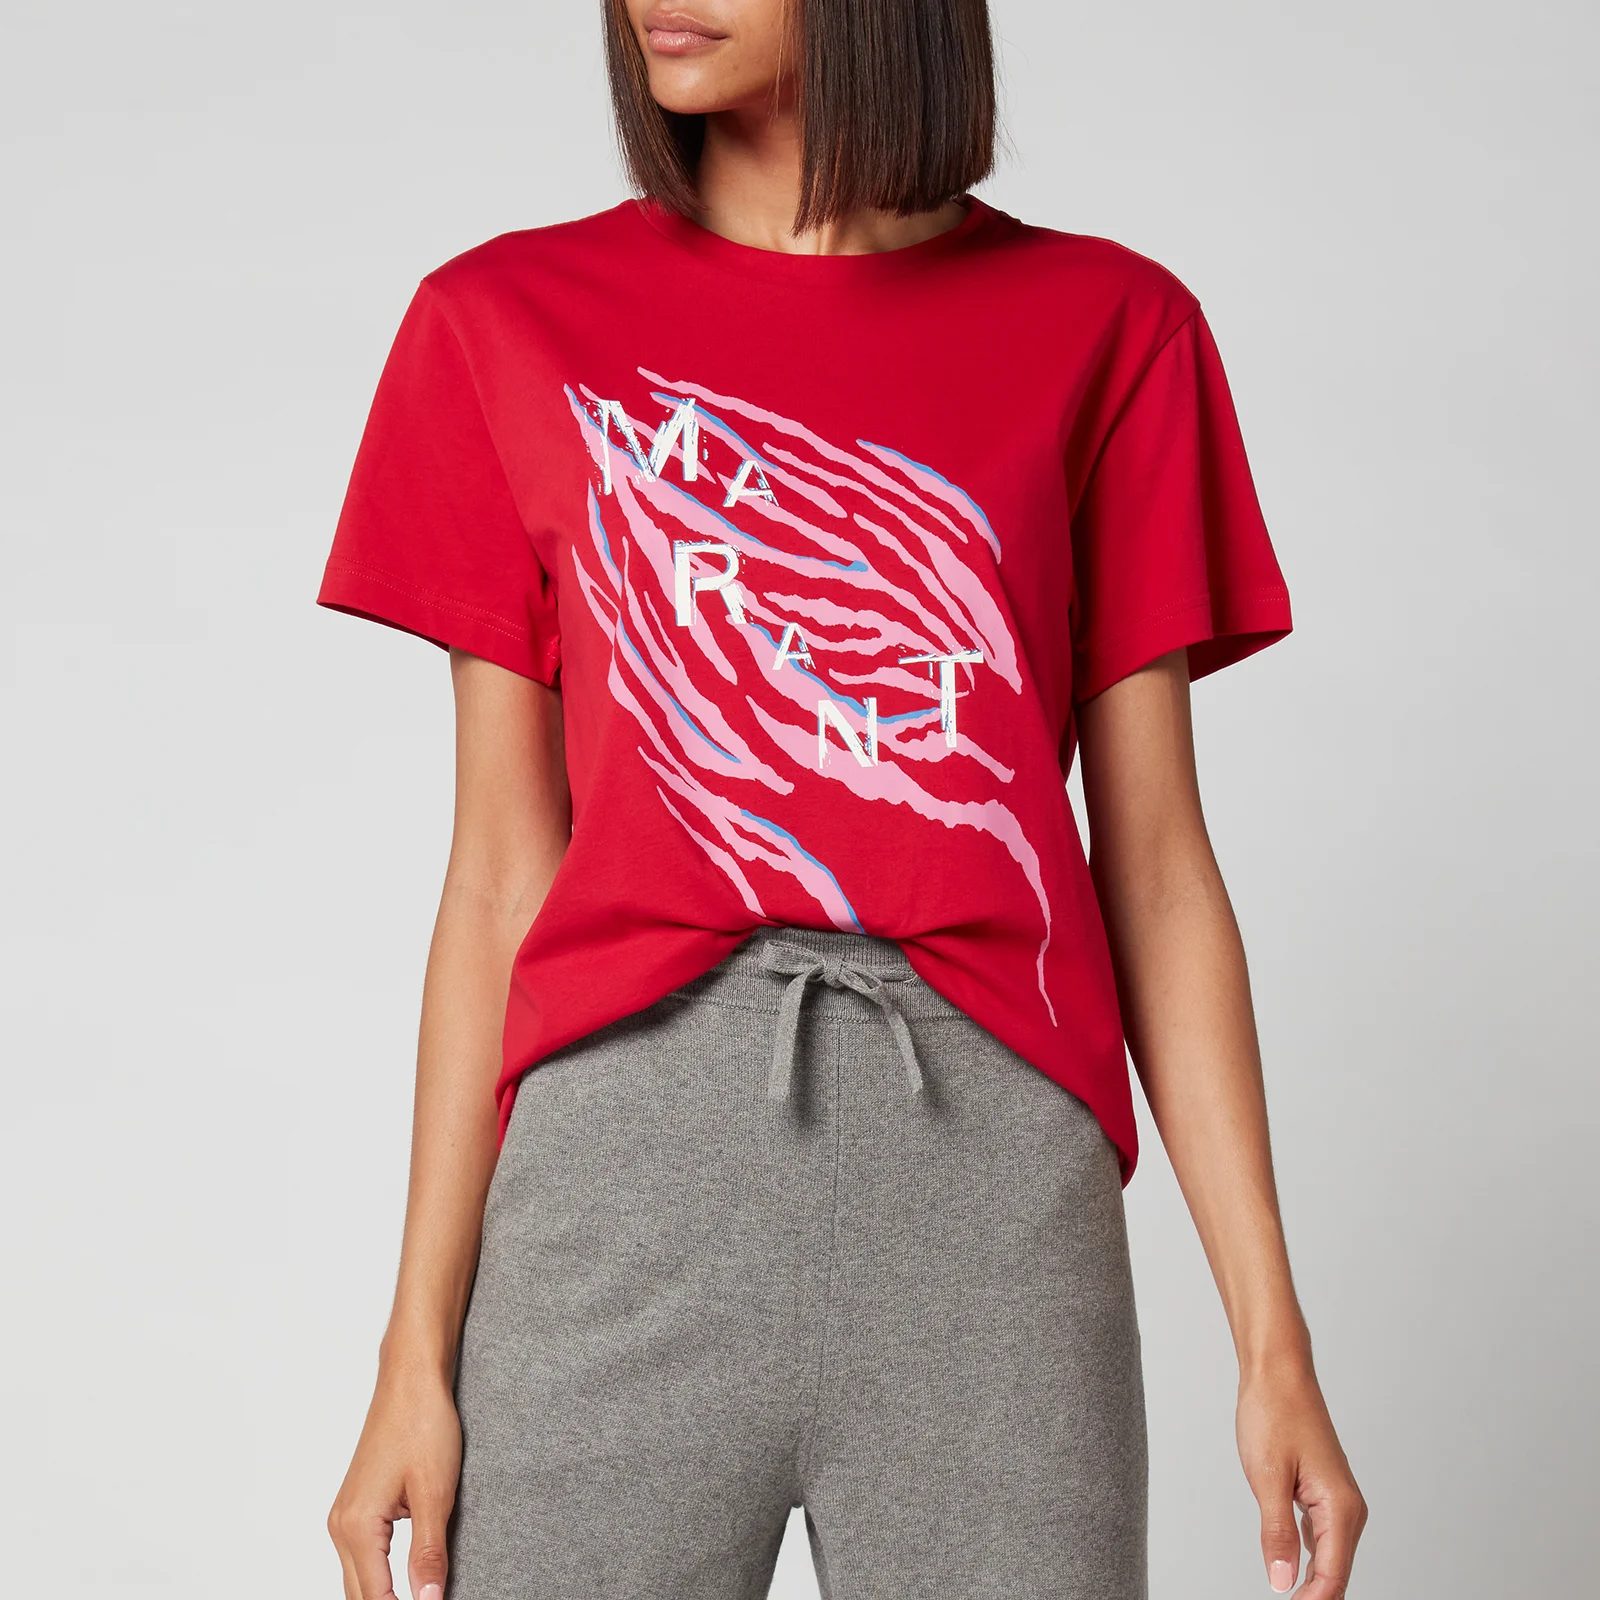 Isabel Marant Women's Zaof T-Shirt - Red Image 1